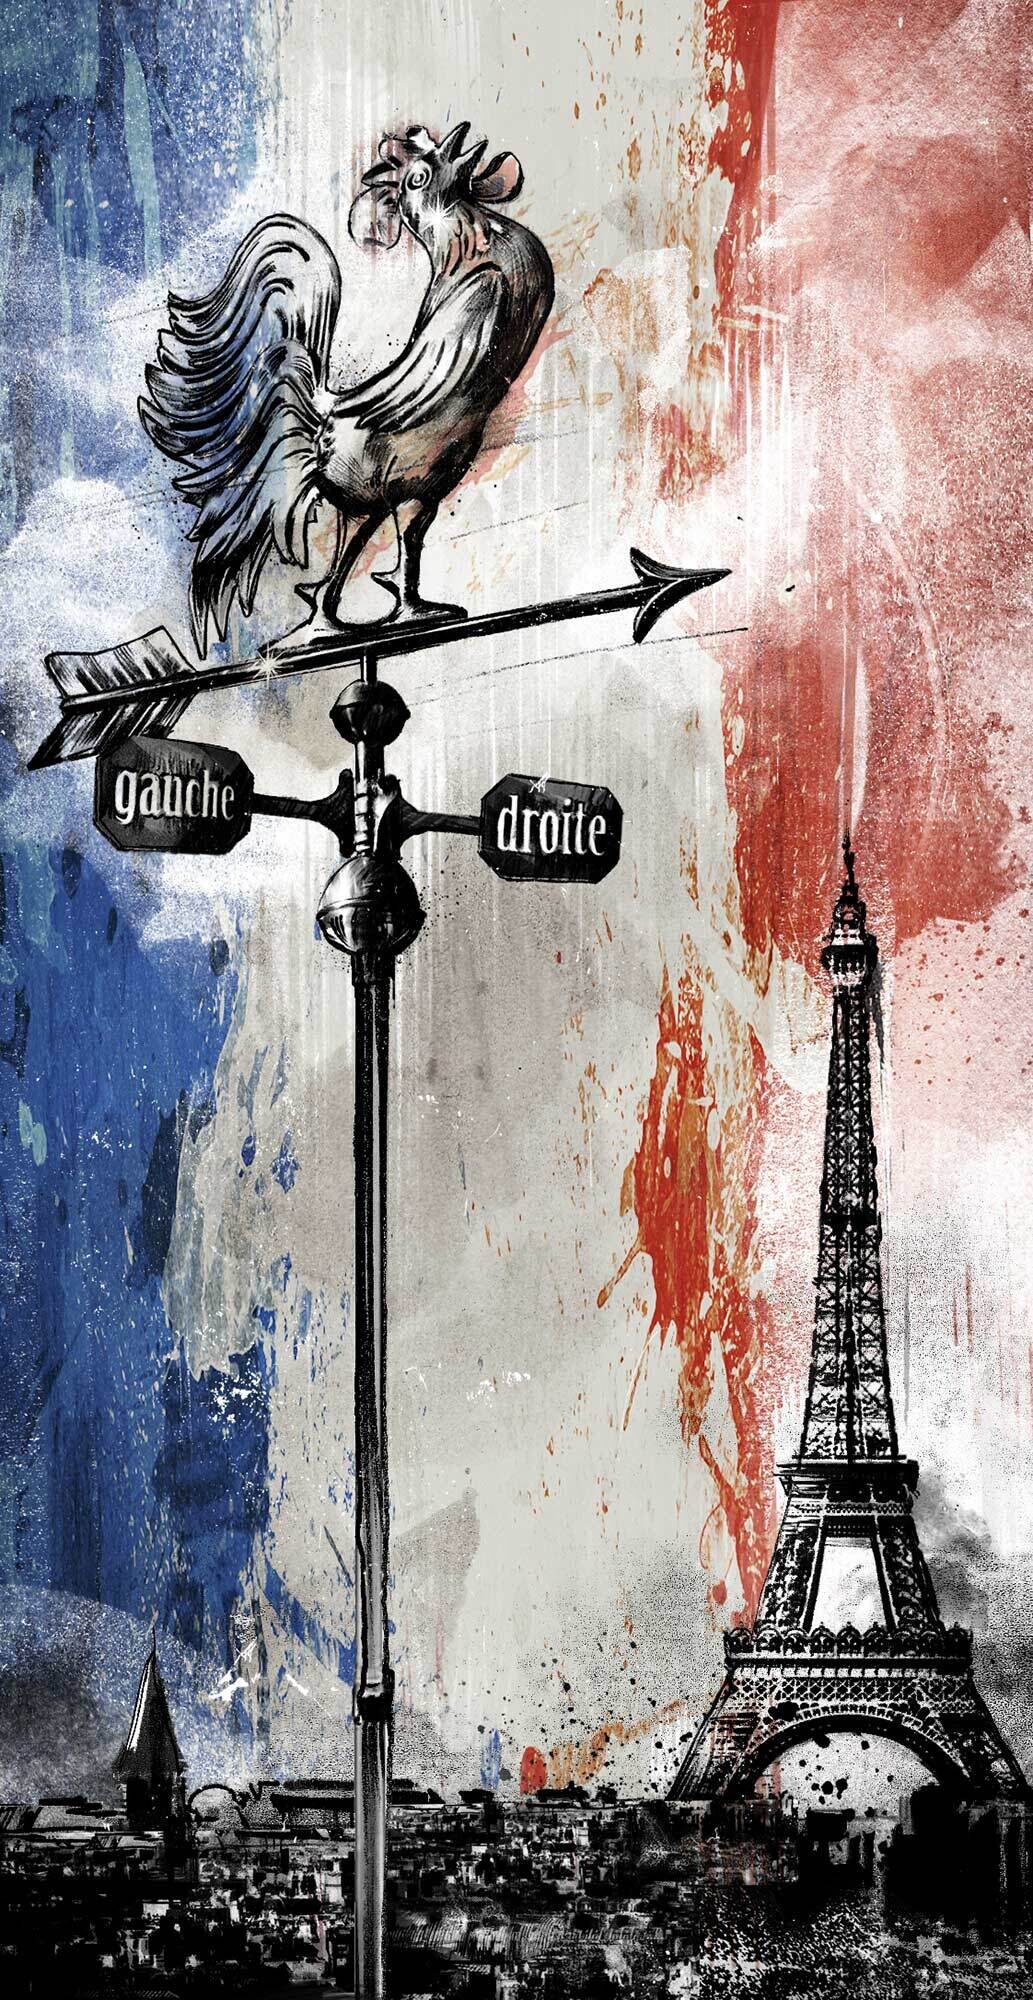 Rechtssturz France coque tour eiffel Paris illustration editorial - Kornel Illustration | Kornel Stadler portfolio